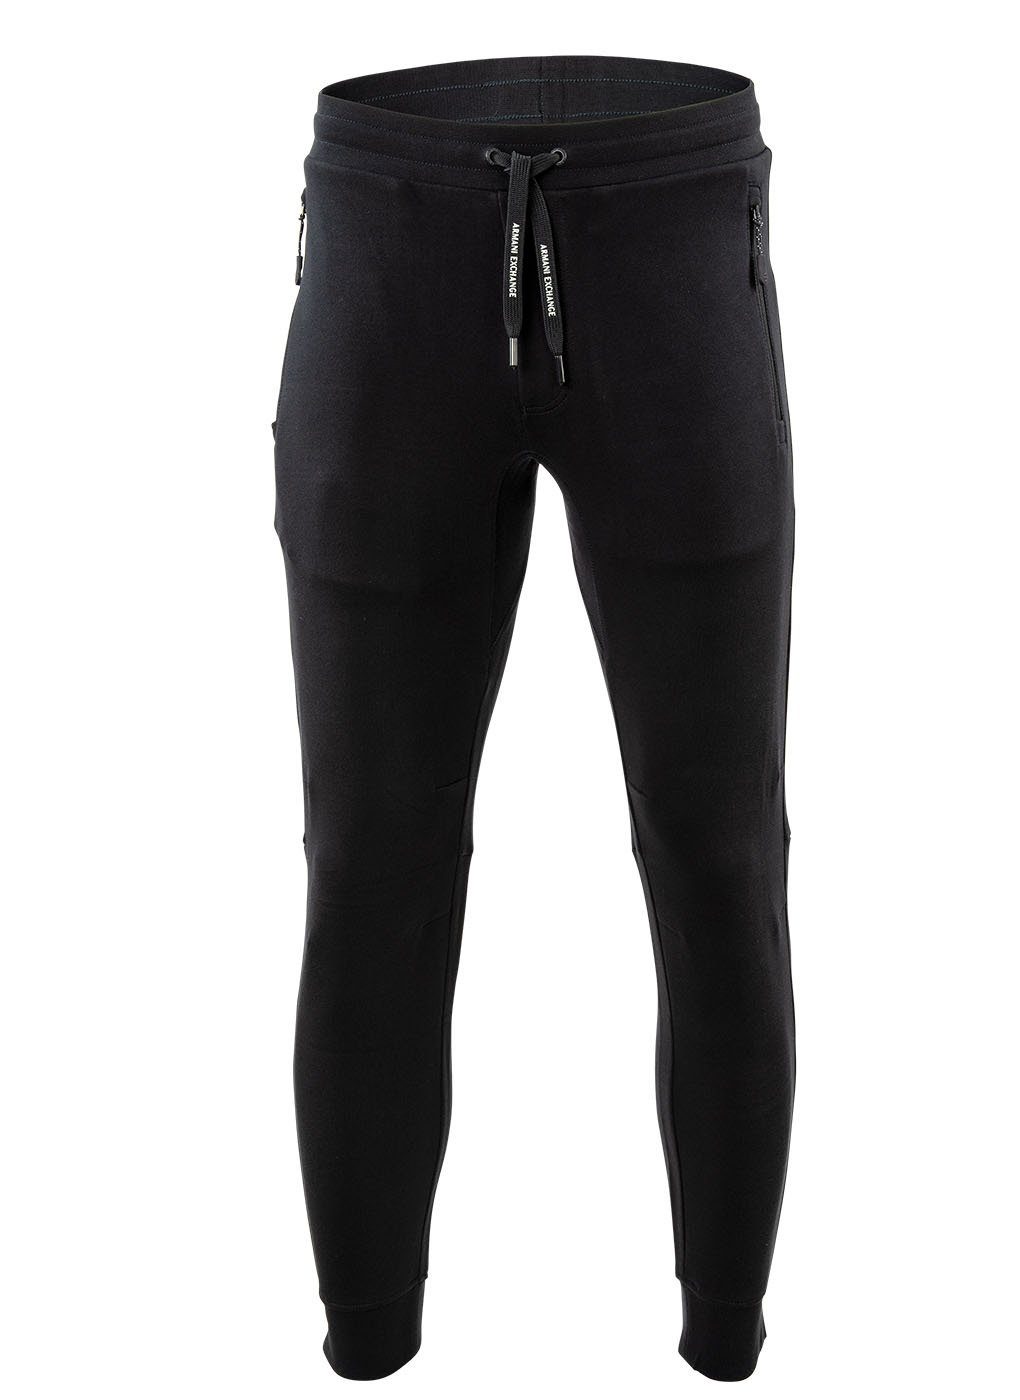 ARMANI EXCHANGE Jogginghose »Herren Jogginghose - Loungewear Pants, lang«  online kaufen | OTTO